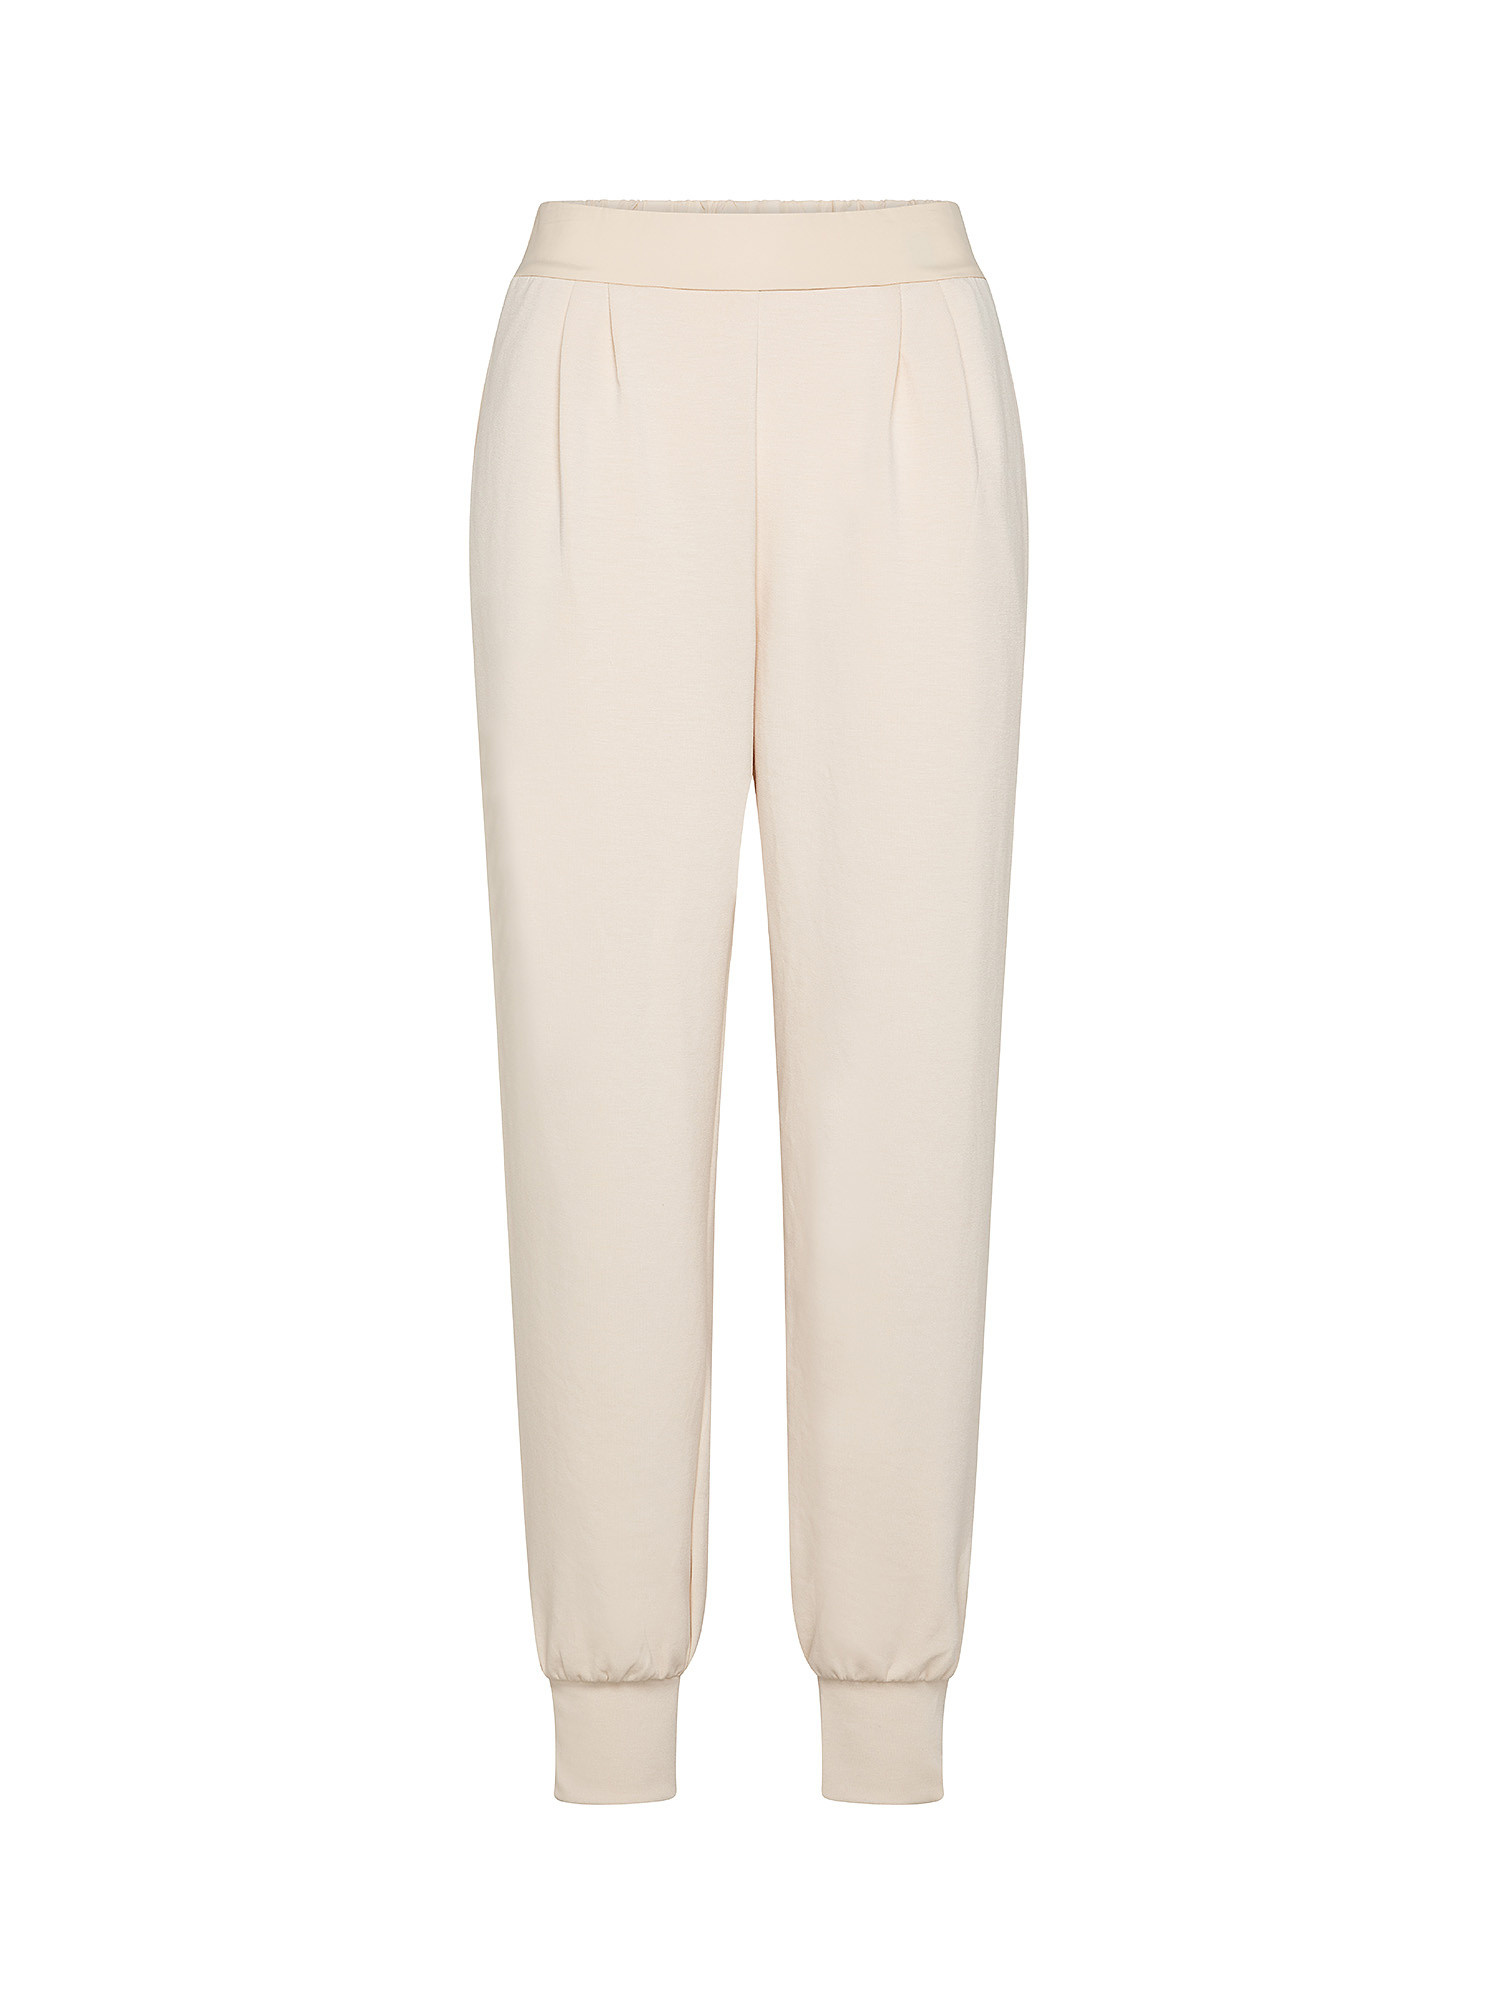 Pantaloni in maglia, Bianco ghiaccio, large image number 0